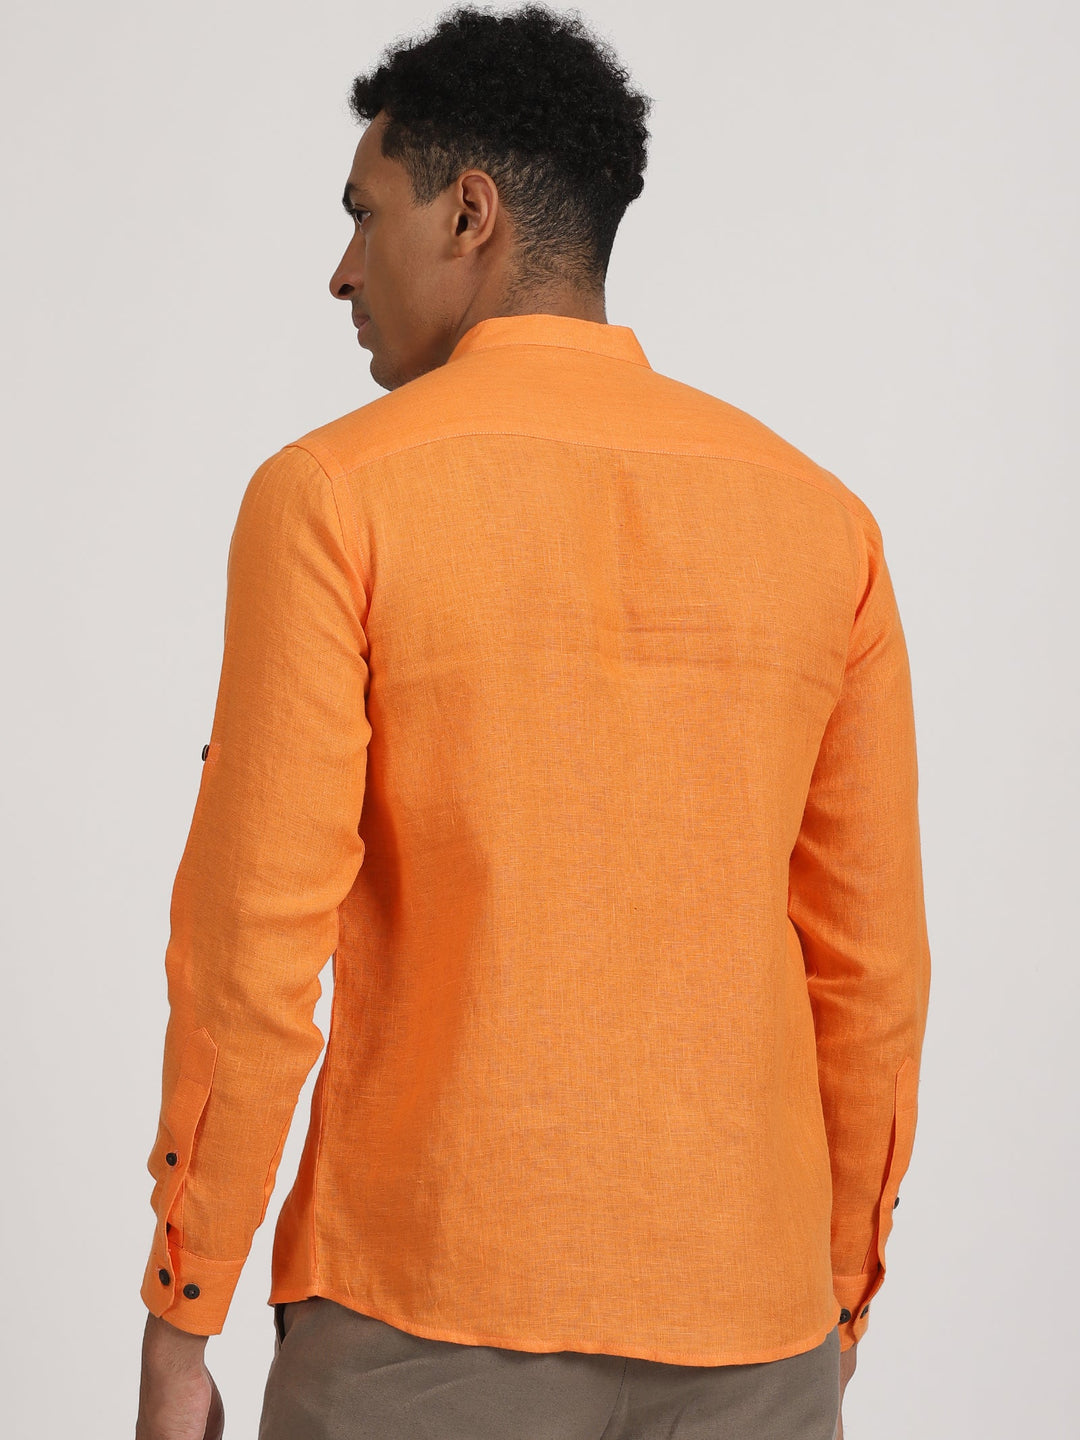 Louis- Men's Pure Linen Full Sleeve Shirt - Beer Orange | Rescue